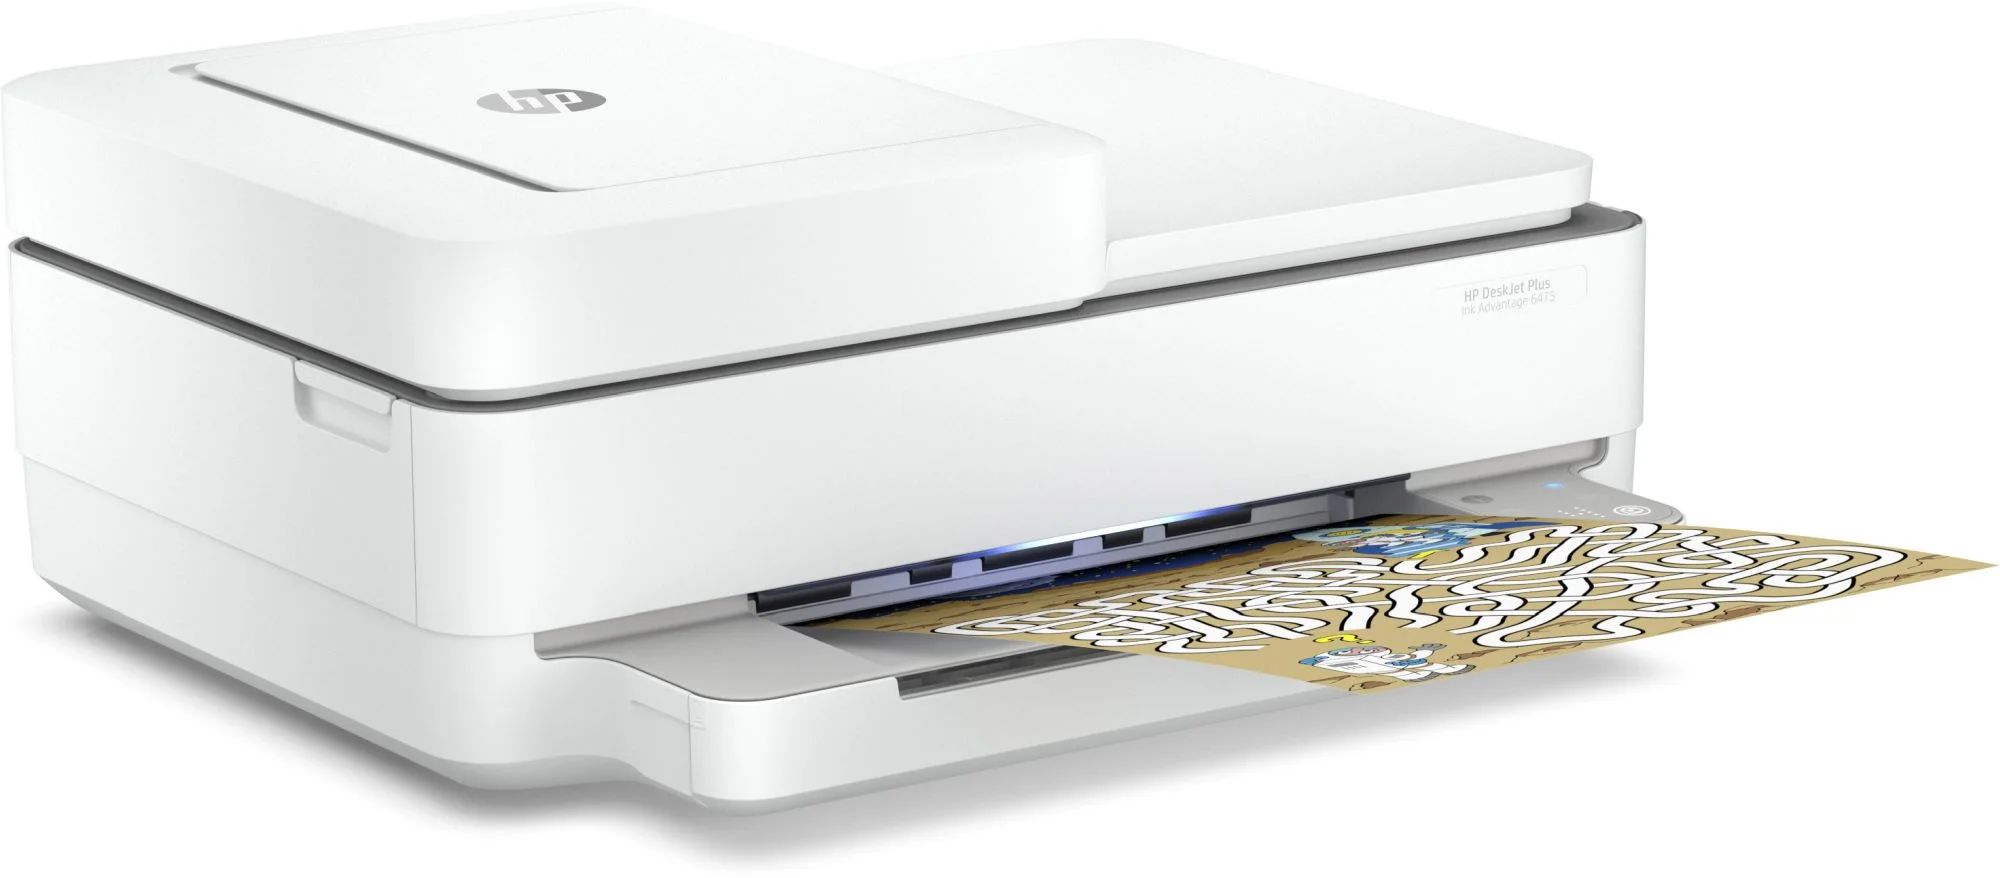 Mfp Inkjet Hp Deskjet Ink Advantage 6475 (5sd78c) A4 Duplex Wifi Usb White  Printer - Printers - AliExpress